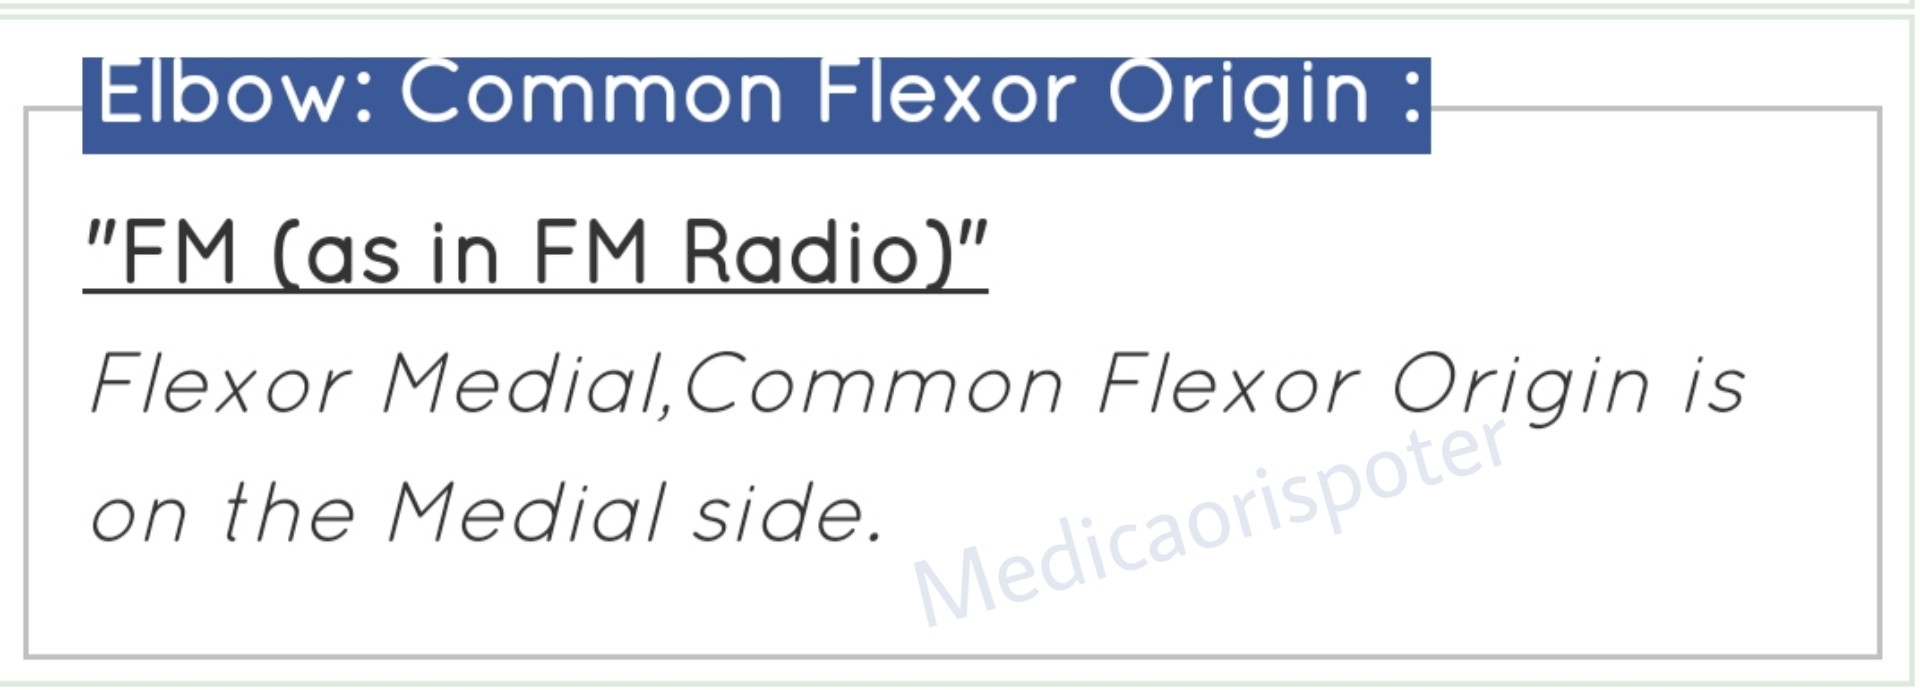 Common Flexor Origin at the Elbow